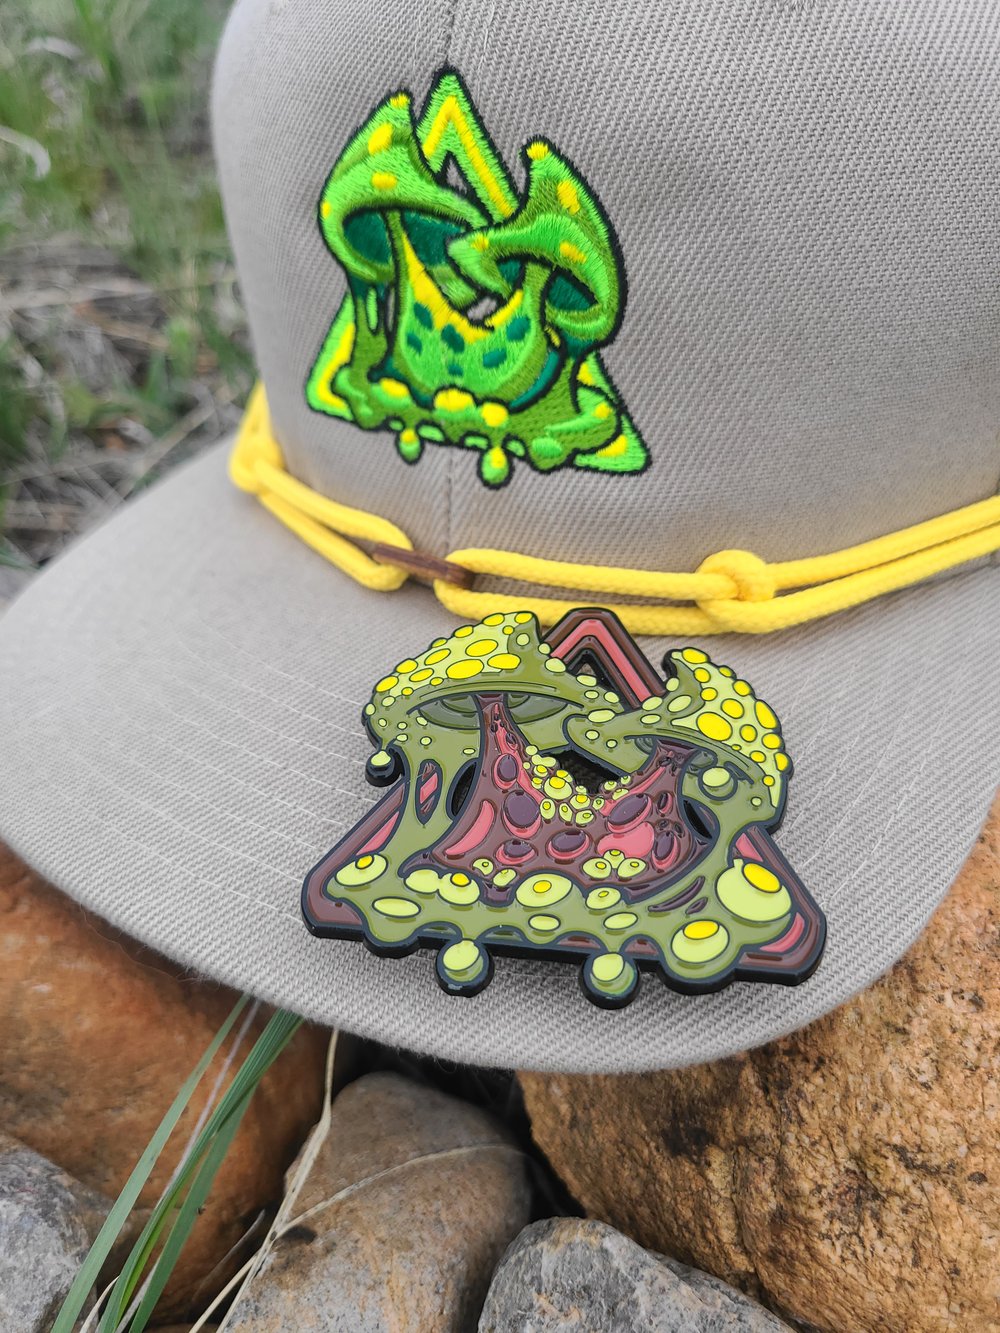 Image of "Mossy Mushroom" mint_beastwood x Findlay hats collab